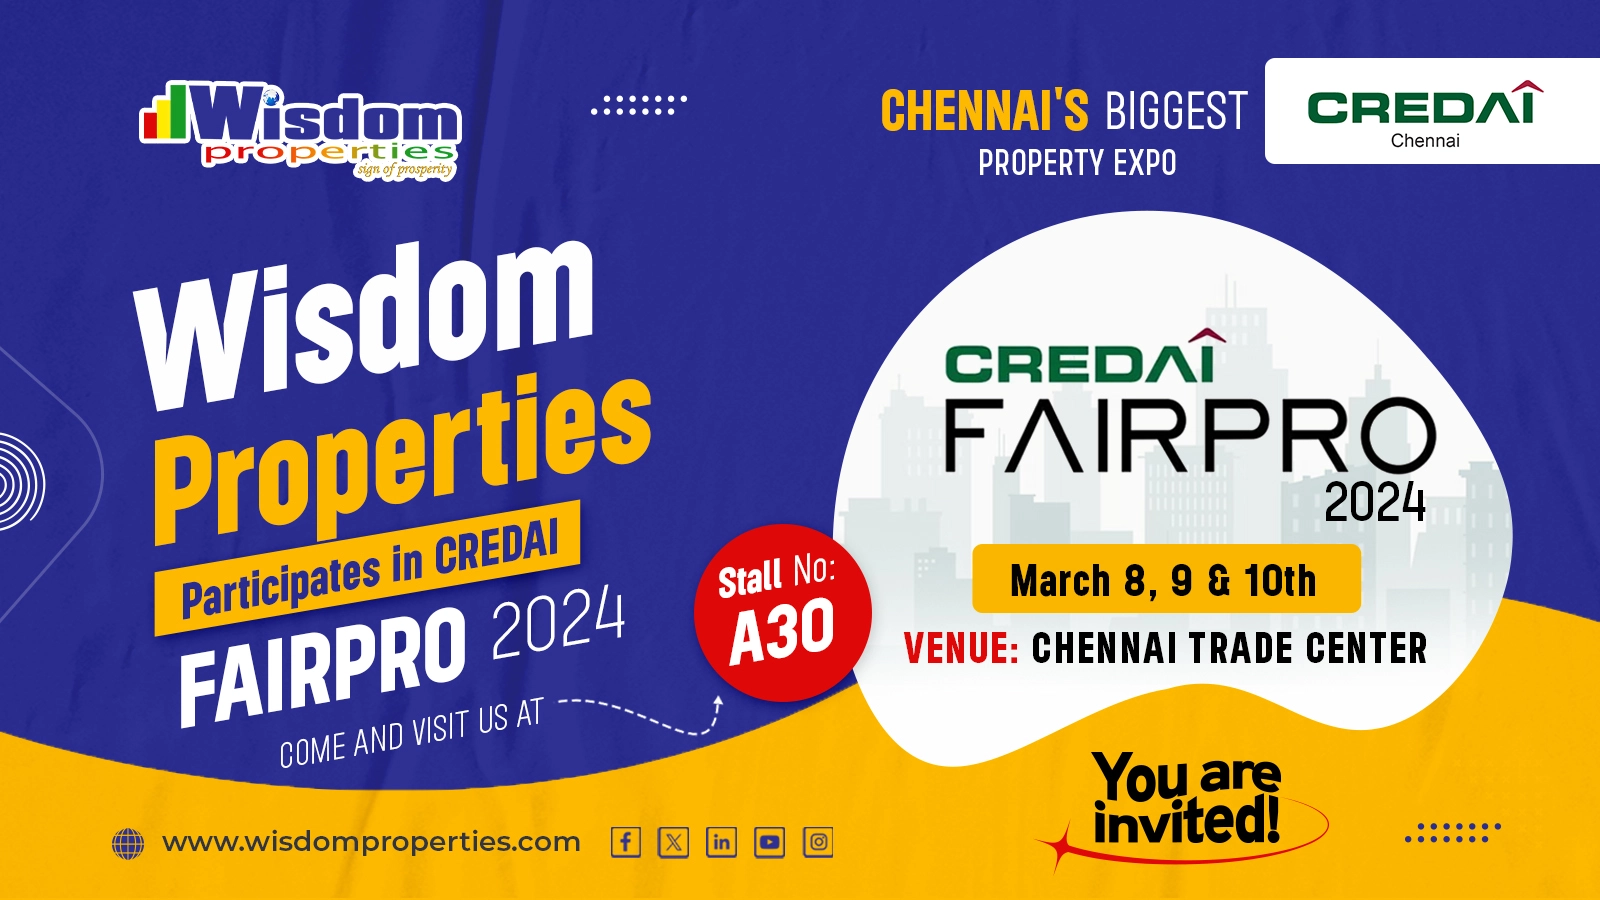 CREDAI FAIRPRO 2024: Wisdom Properties Showcases Budget-Friendly Plots near Chennai in Sriperumbudur, Guduvanchery, and More Locations